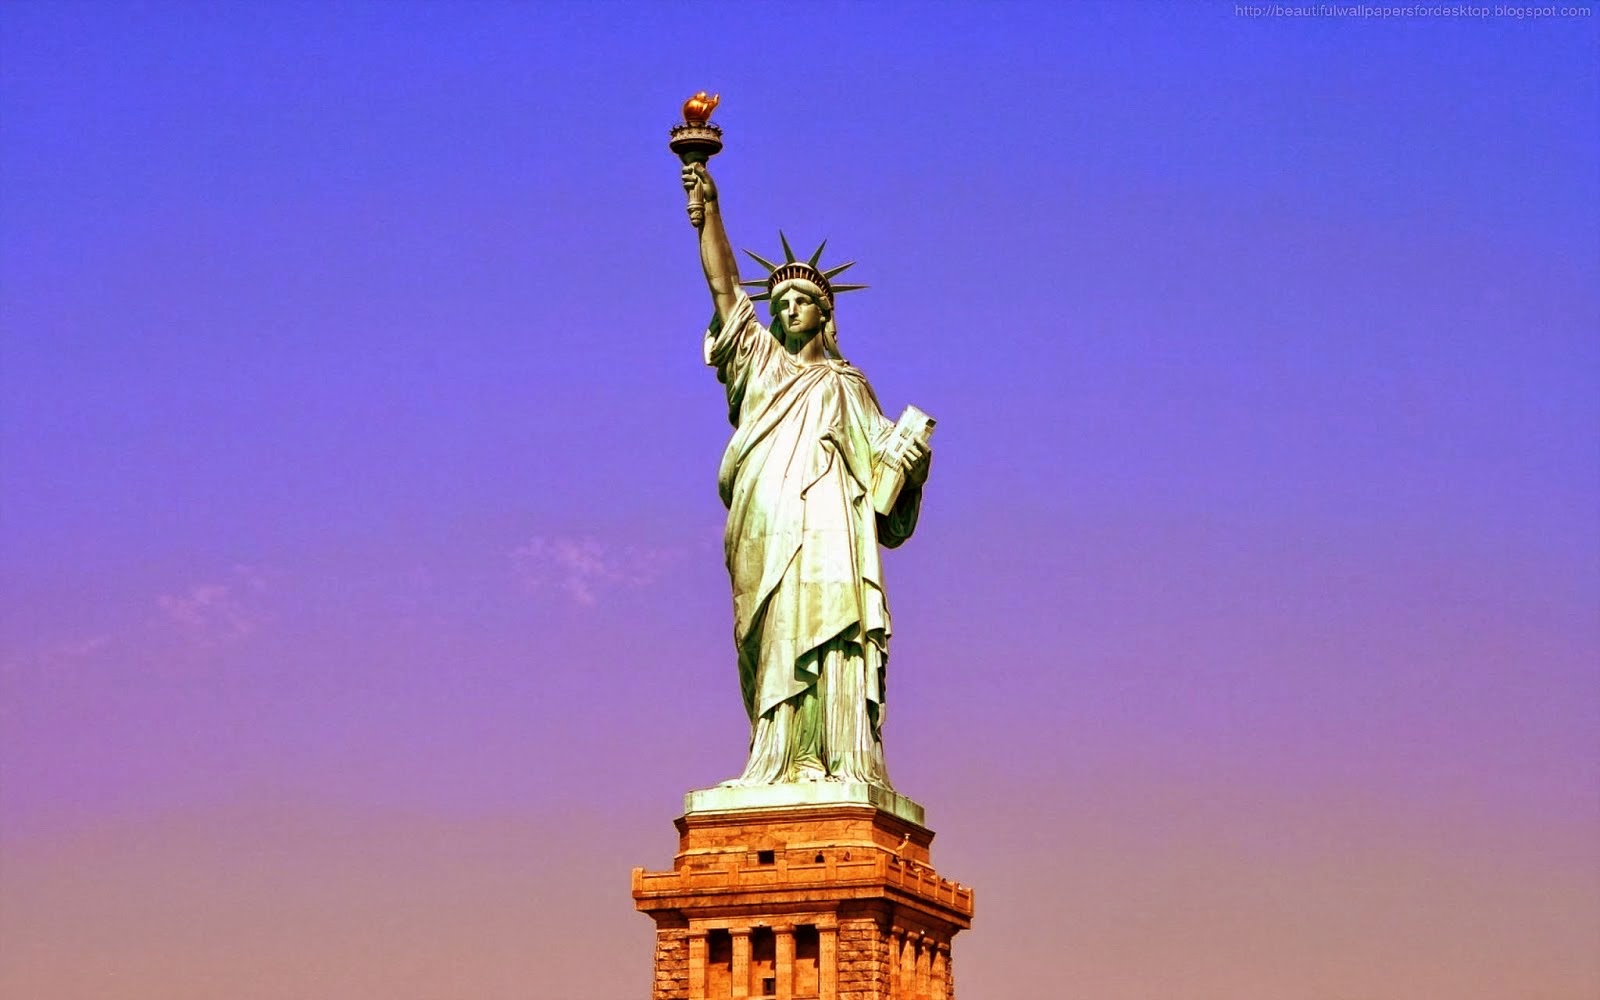 Beautiful Wallpapers Statue Of Liberty Wallpapers Hd Afalchi Free images wallpape [afalchi.blogspot.com]